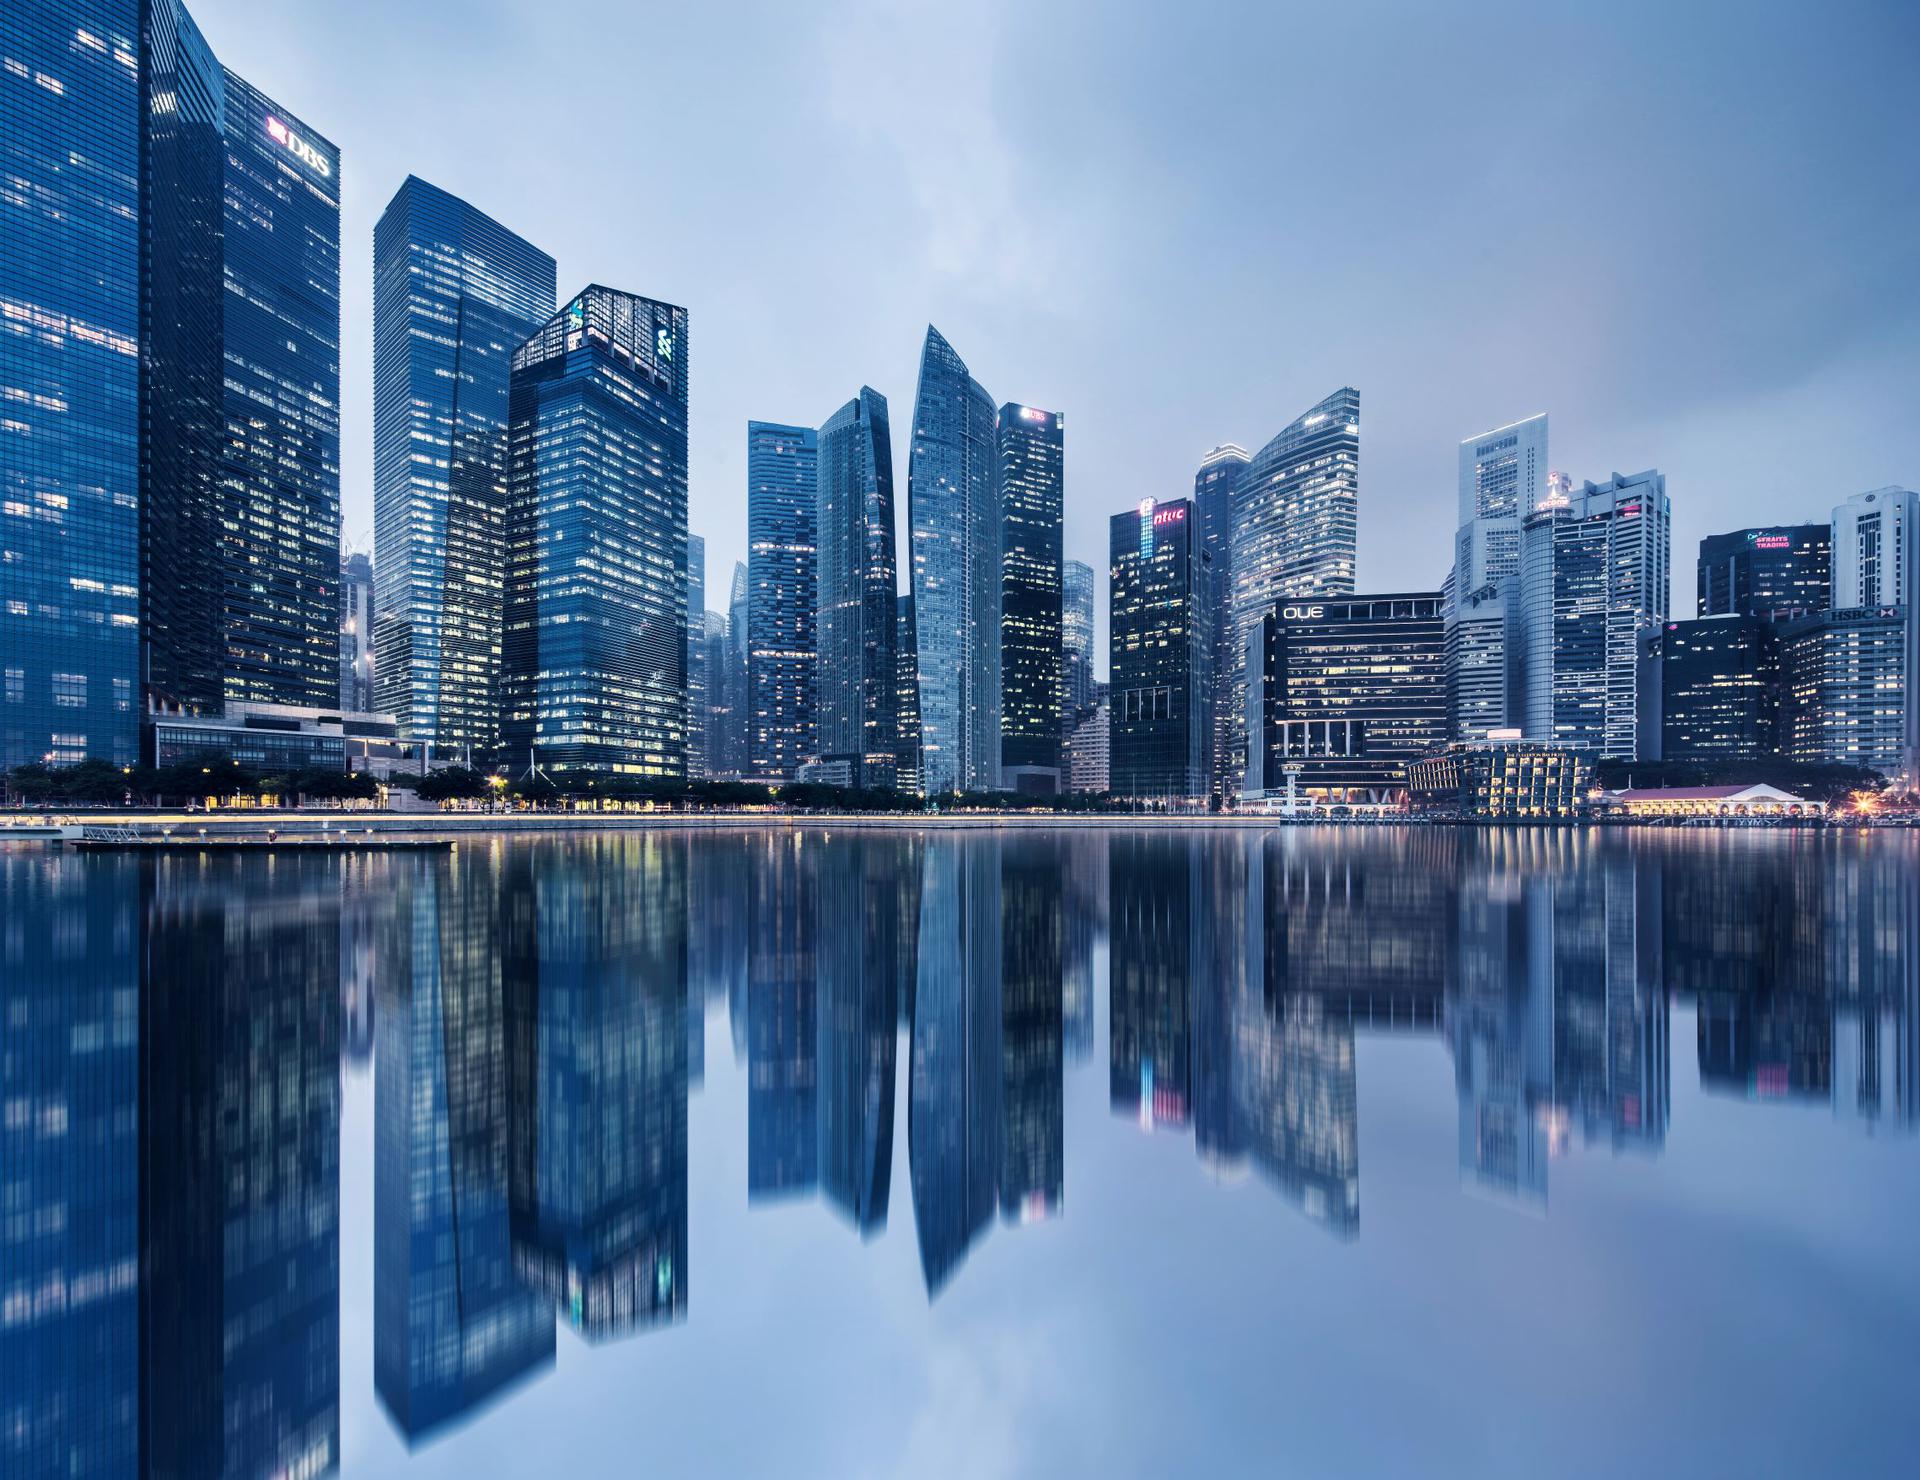 Singapore bonds offer steady returns